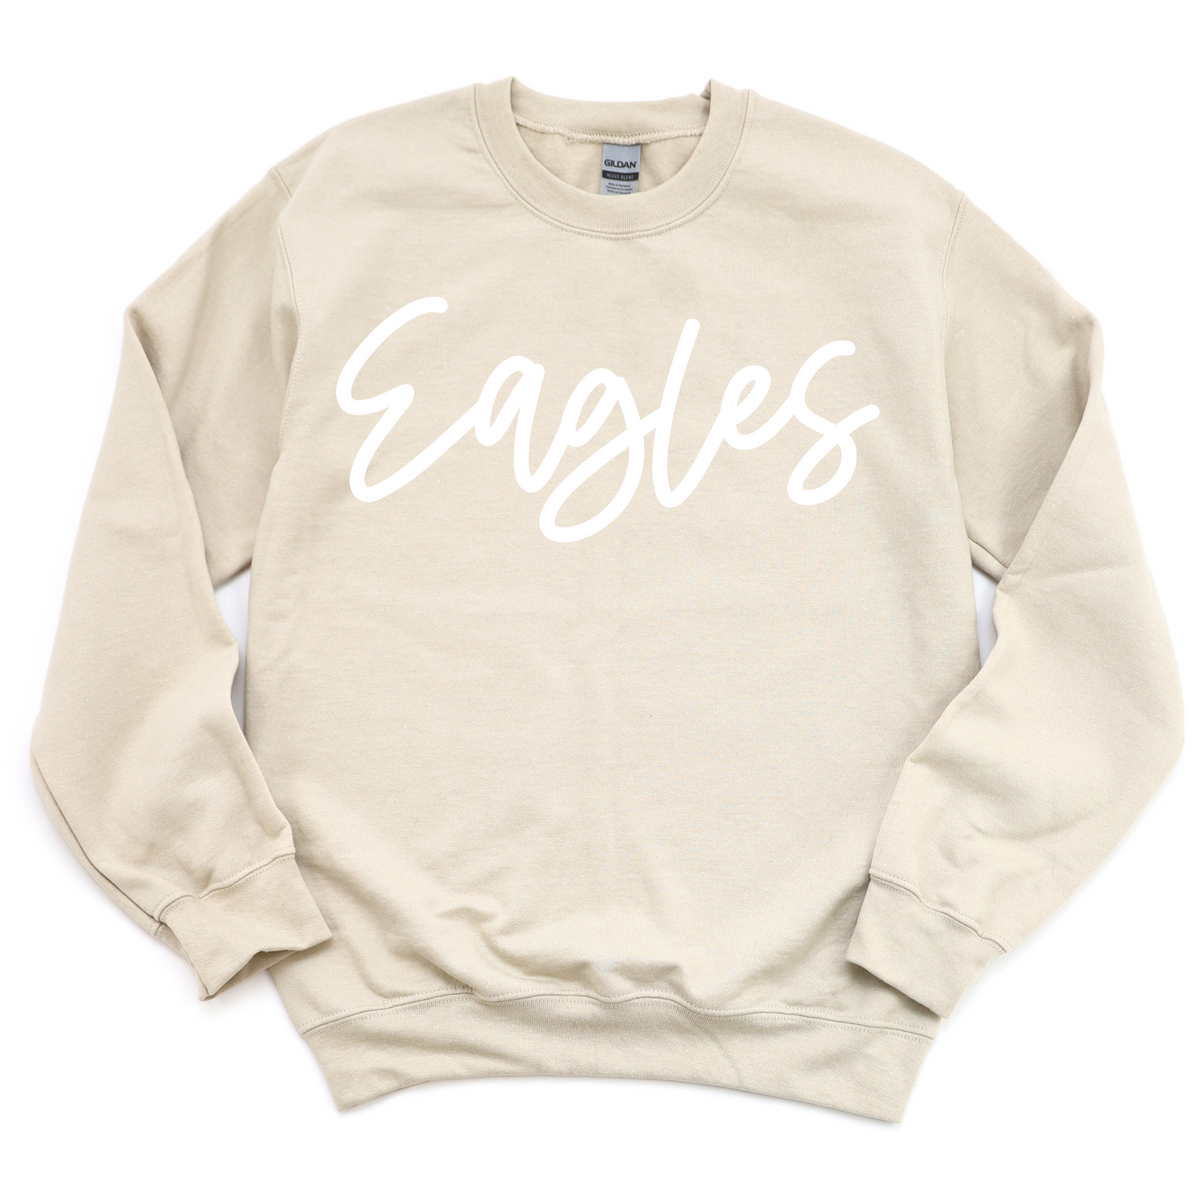 Eagles Crewneck Sweatshirt